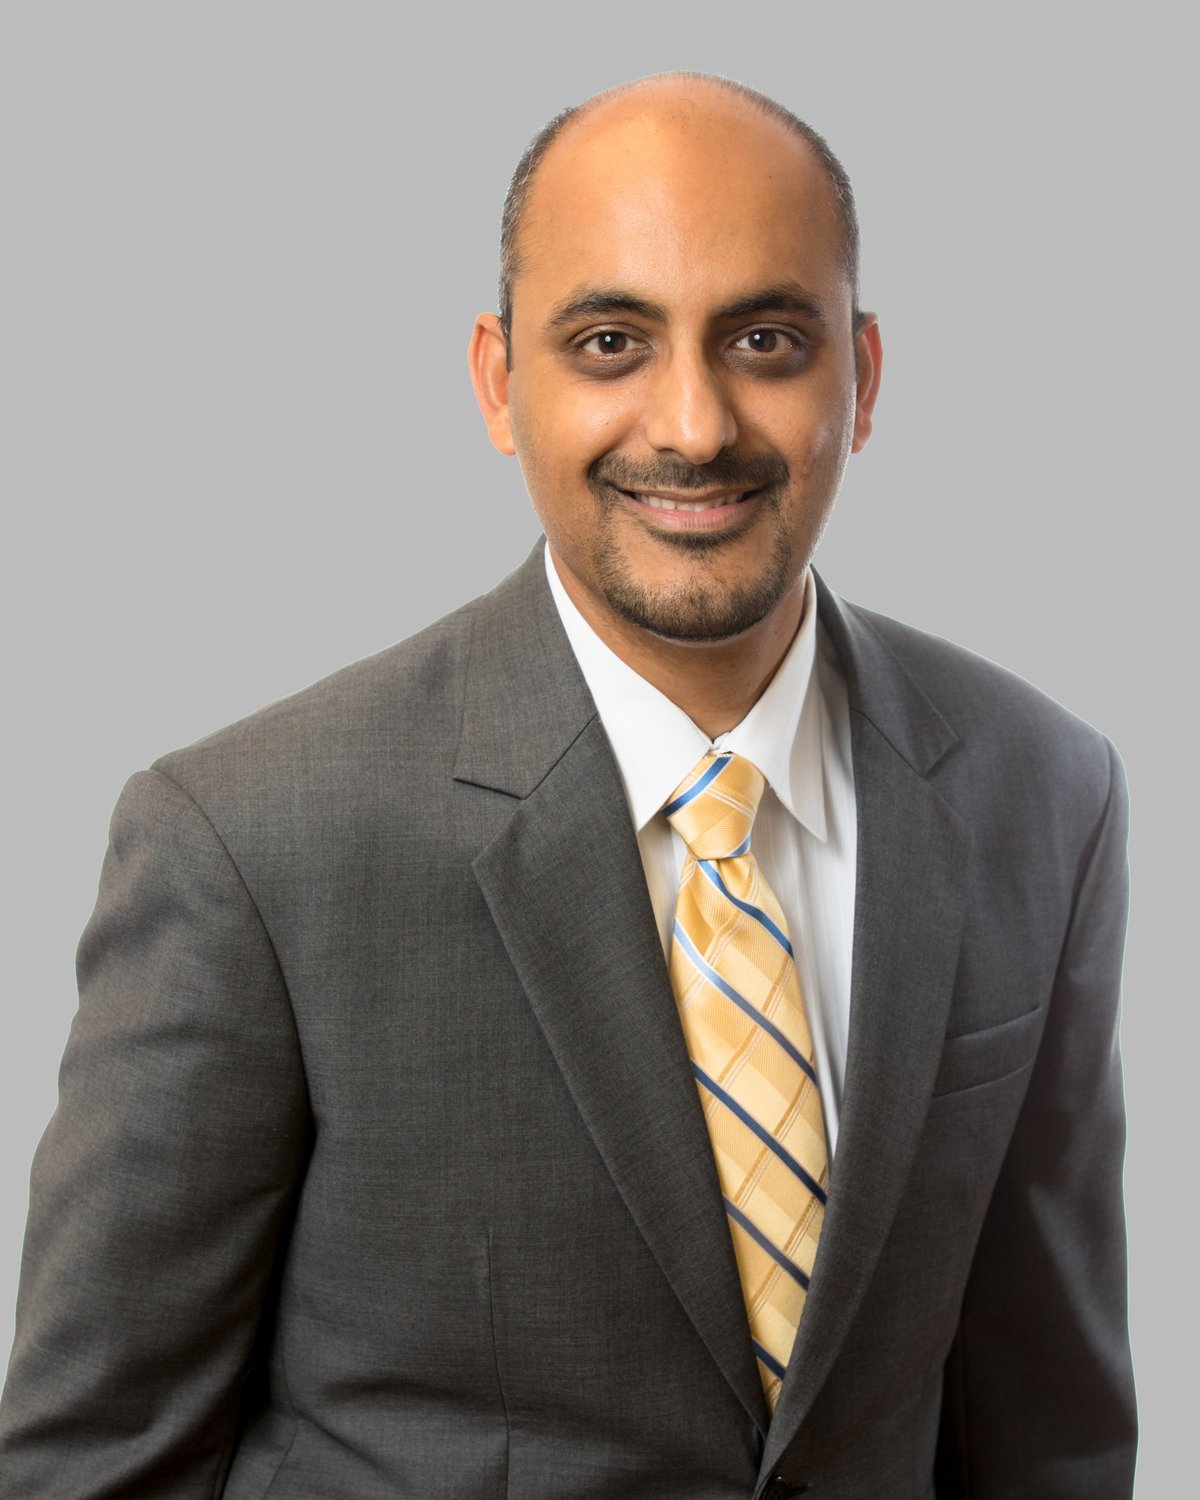 Dr. Neil Sanghvi is an electrophysiologist with the First Coast Heart & Vascular Center.